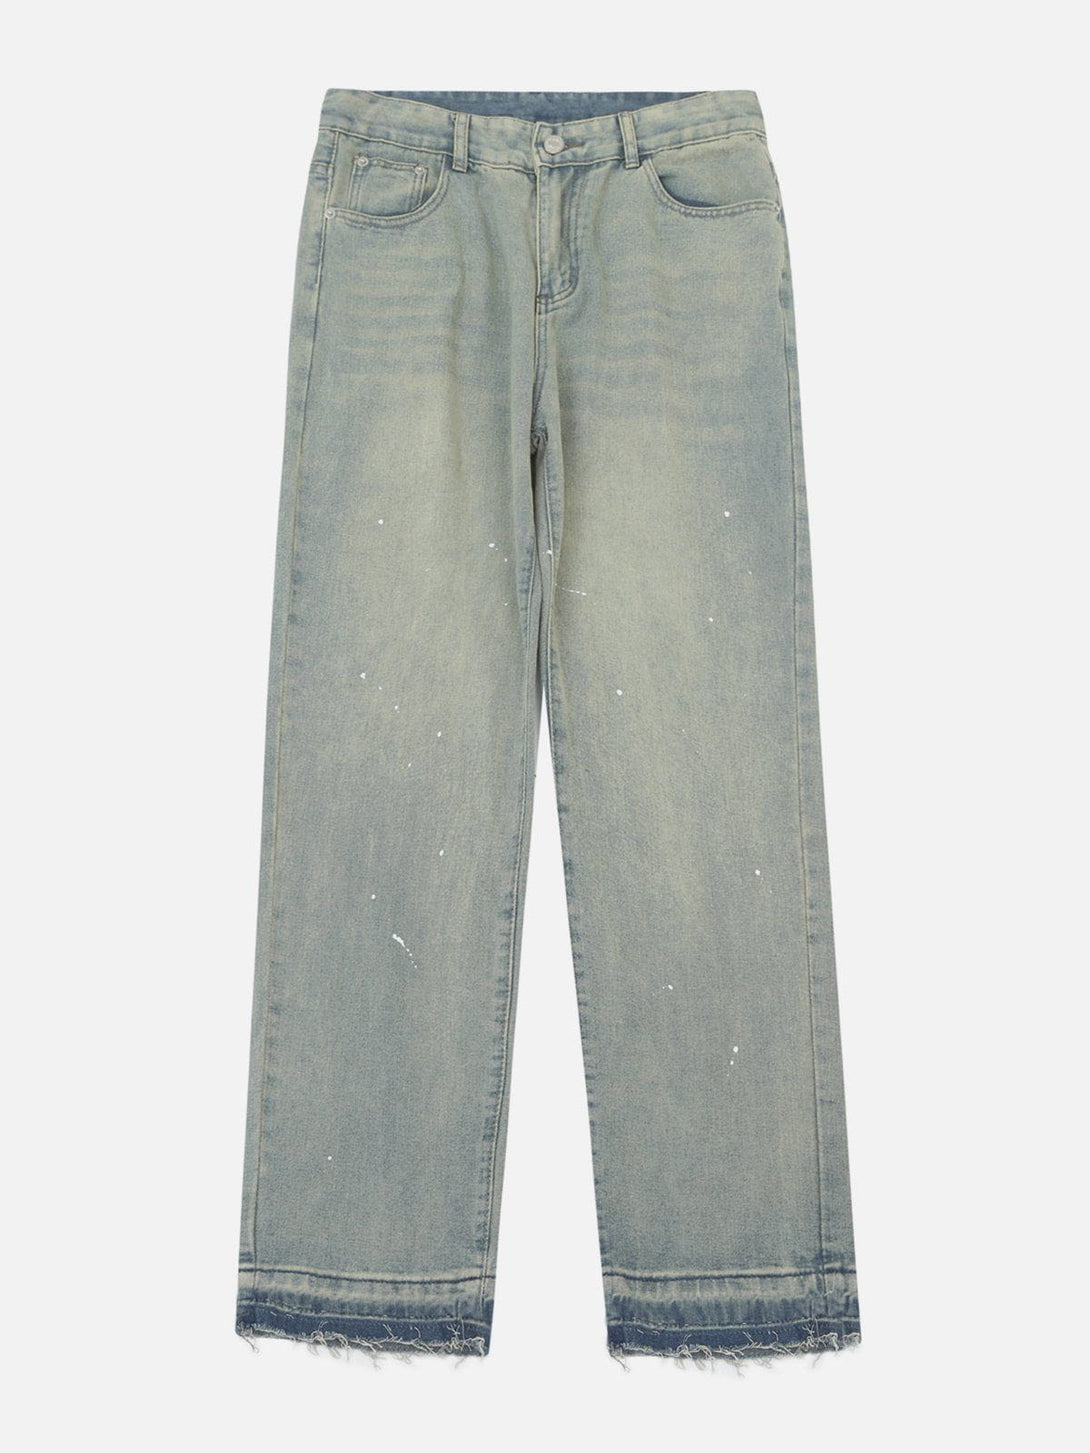 Evapacs - Washed Fringe Jeans- Streetwear Fashion - evapacs.com